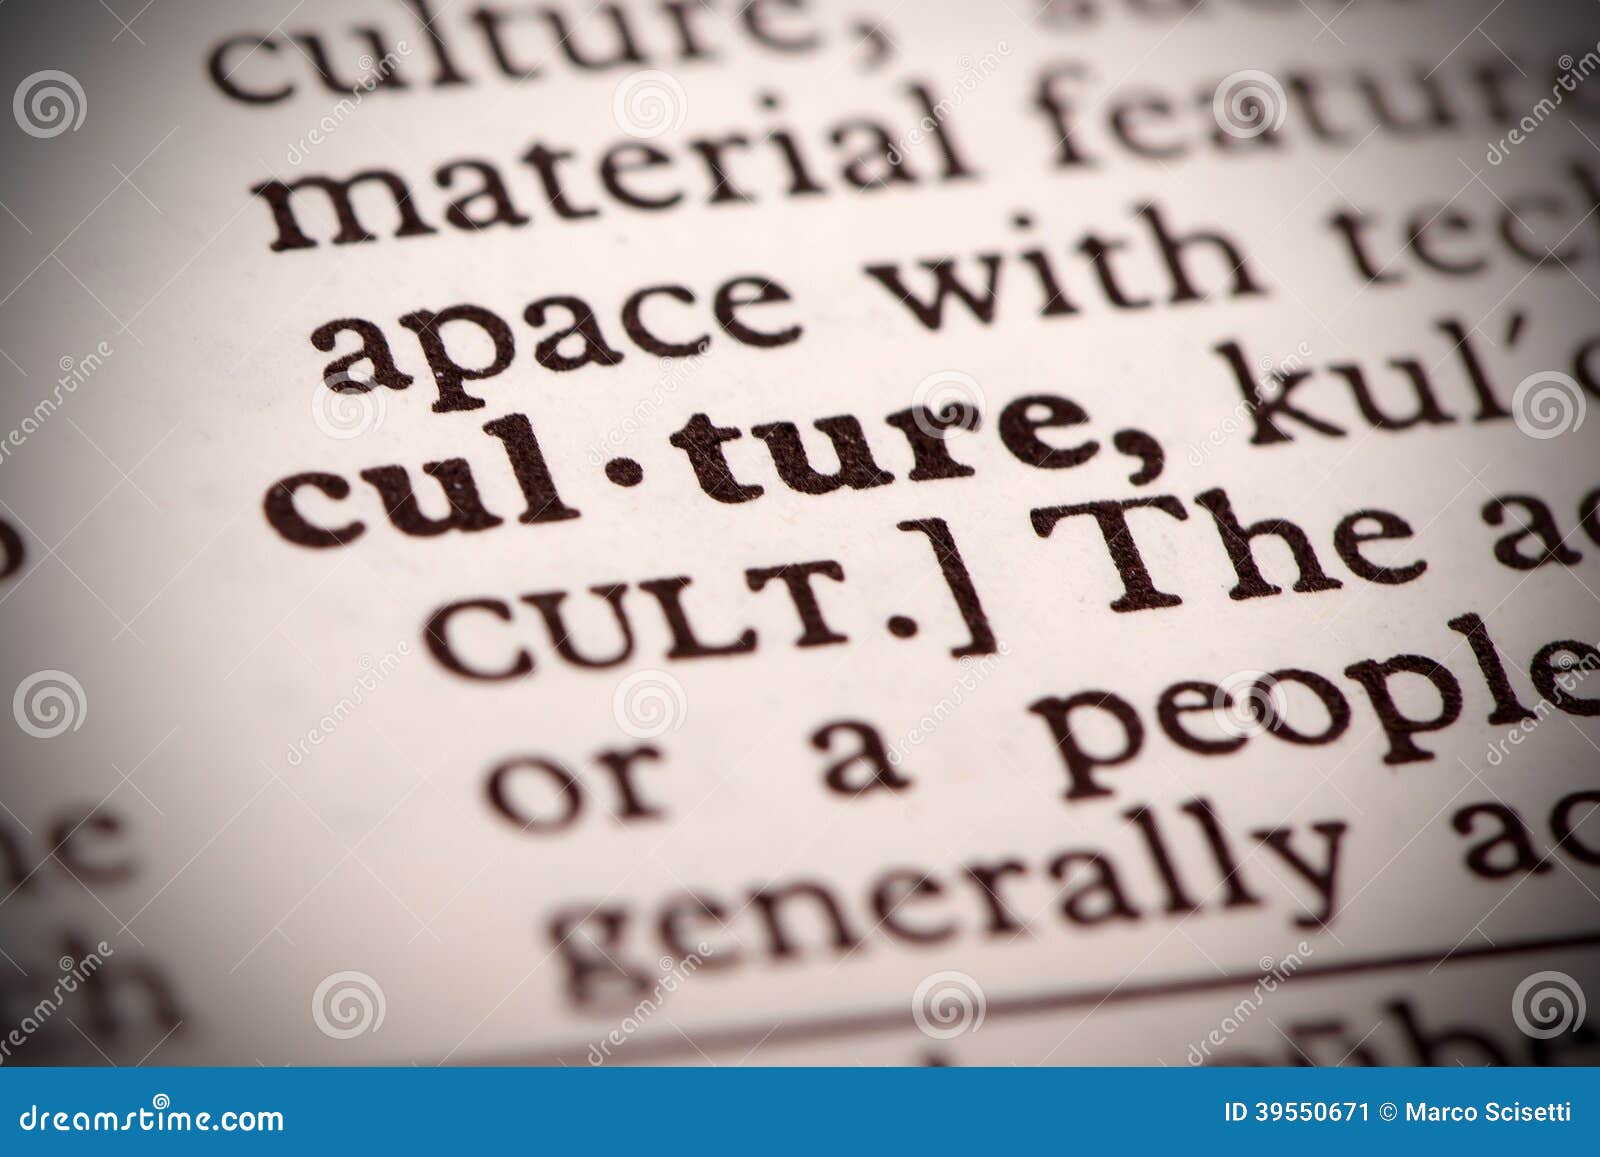 culture definition